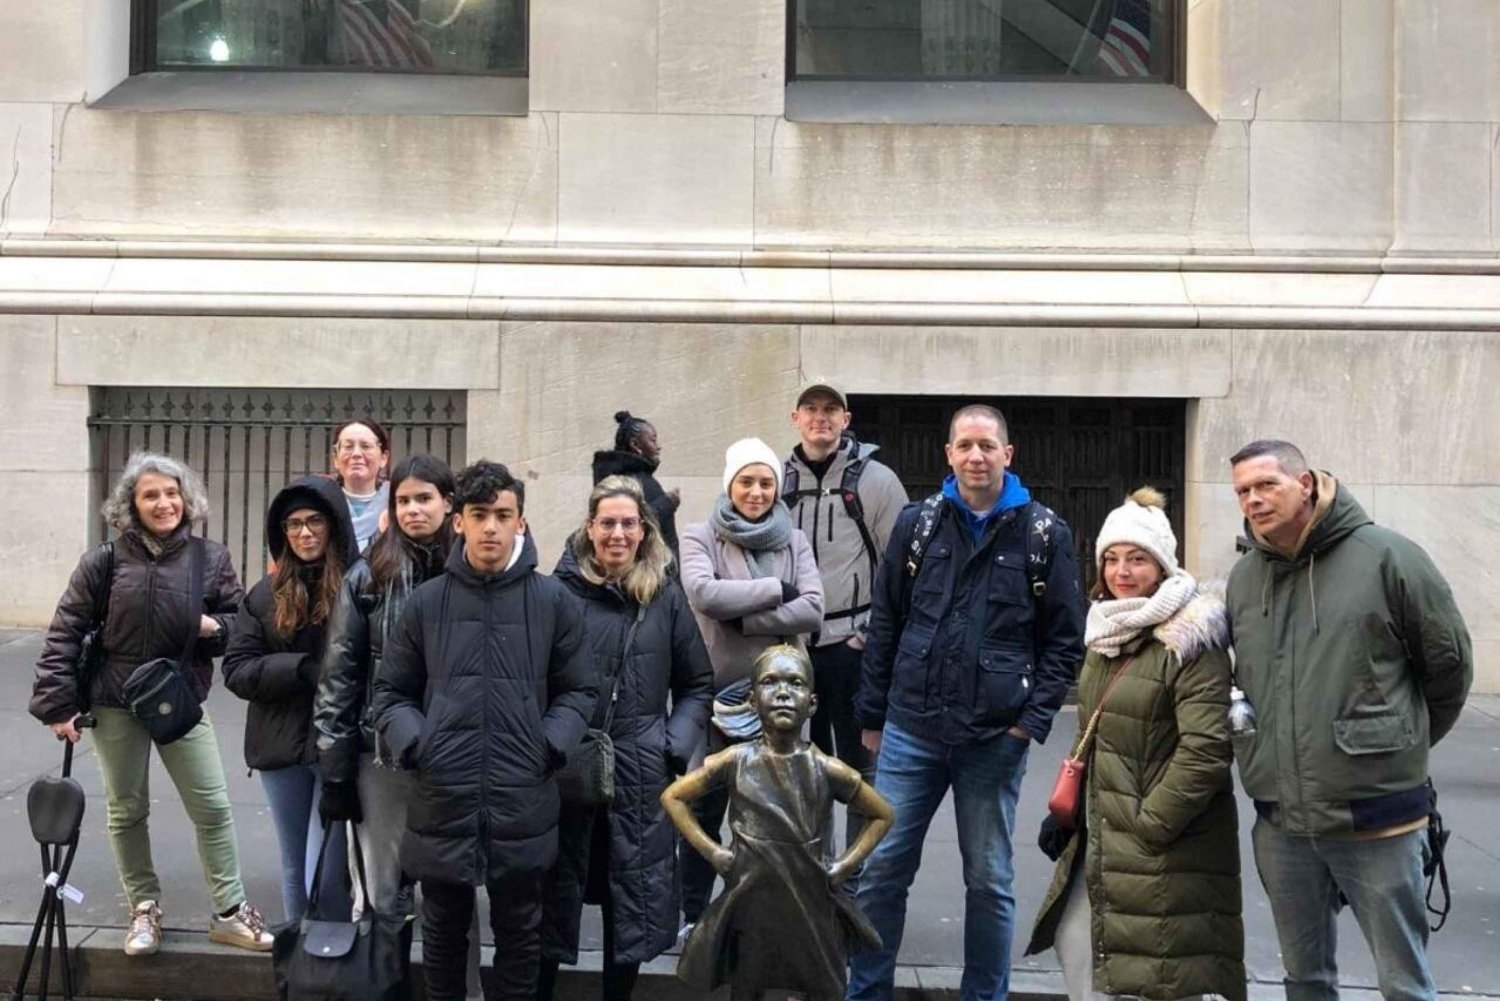 NYC: Besøk 9/11-museet og omvisning til fots på Manhattan